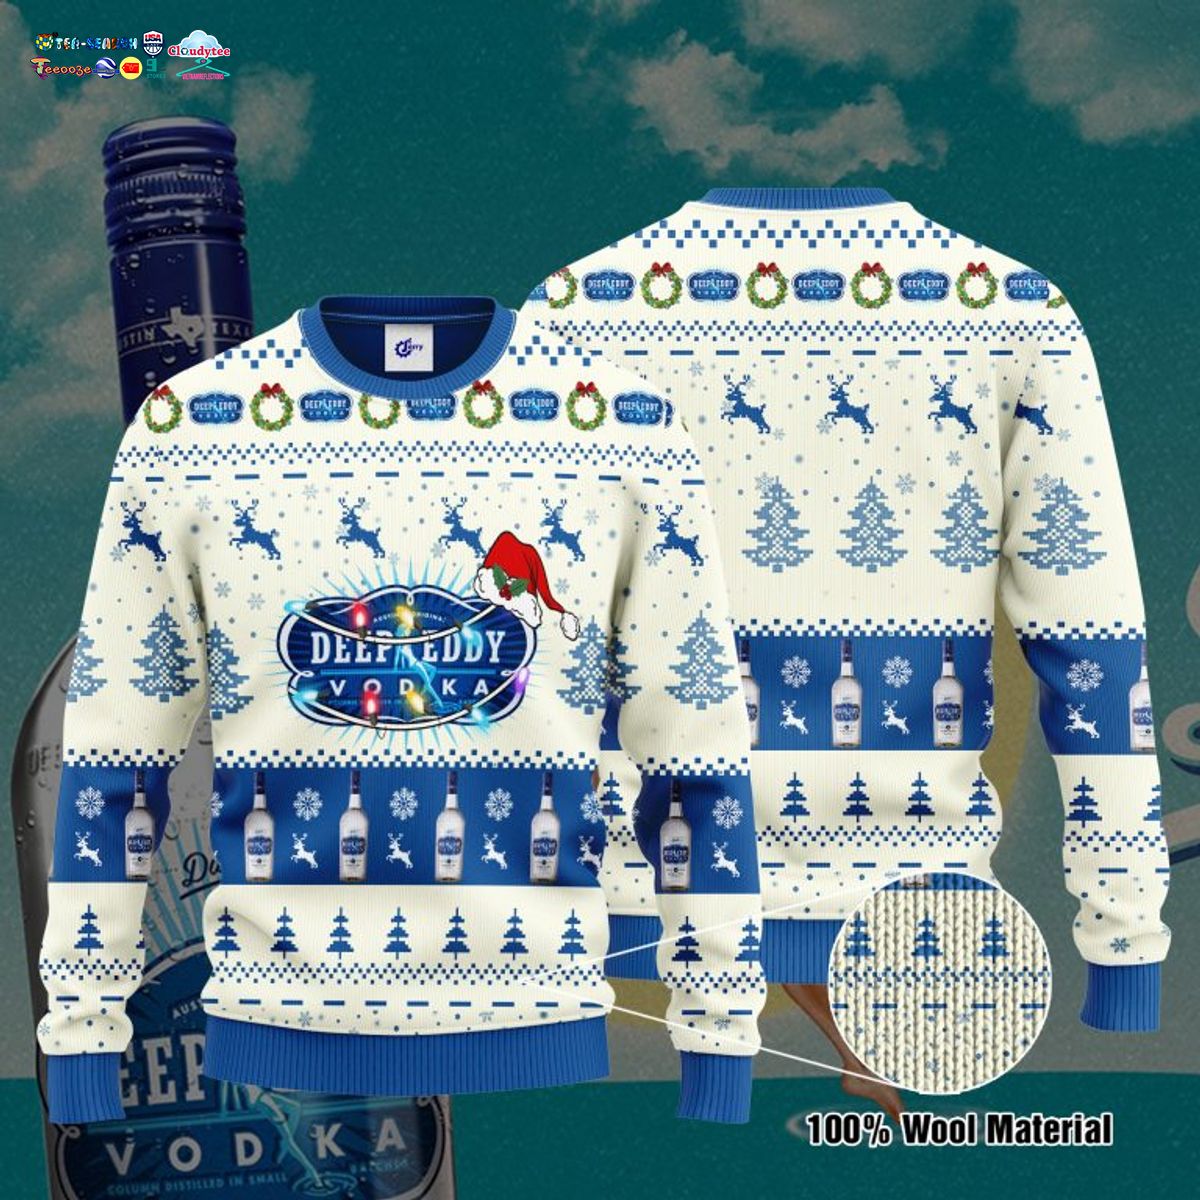 Deep Eddy Vodka Santa Hat Ugly Christmas Sweater